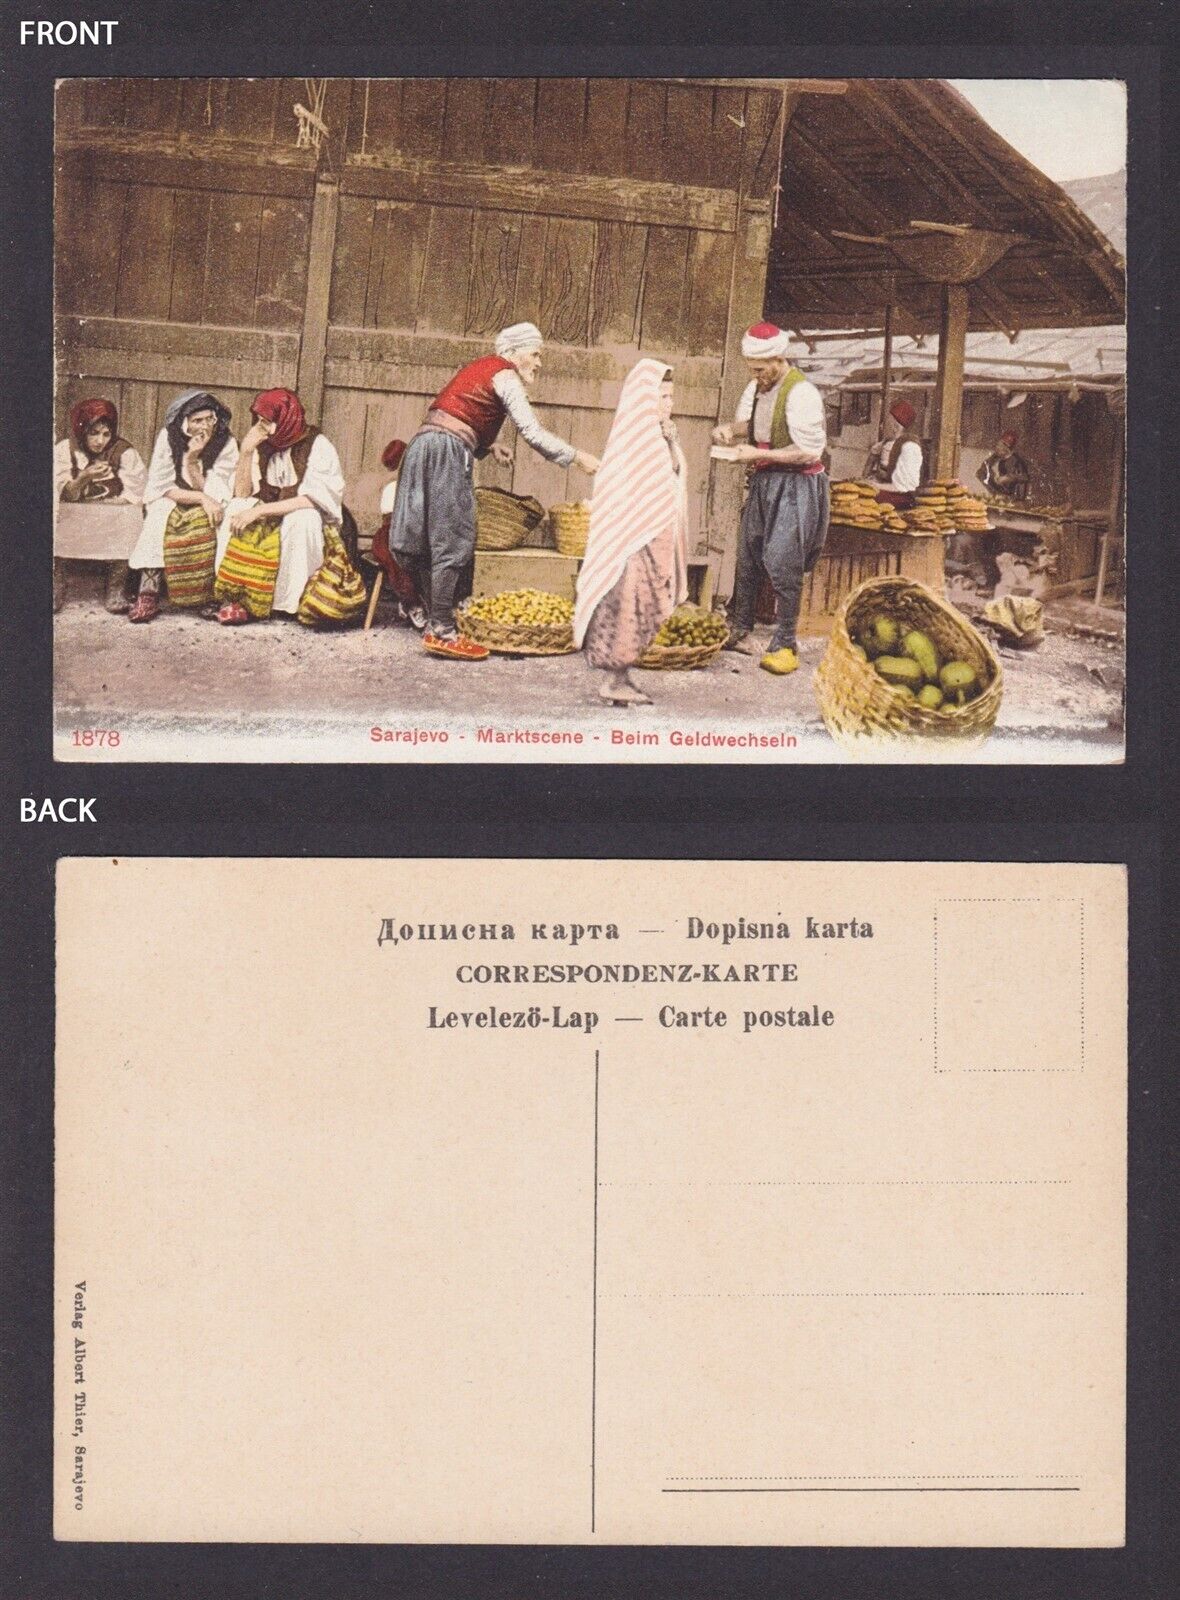 BOSNIA-HERZEGOVINA, Postcard, Sarajevo, Market, The changing money